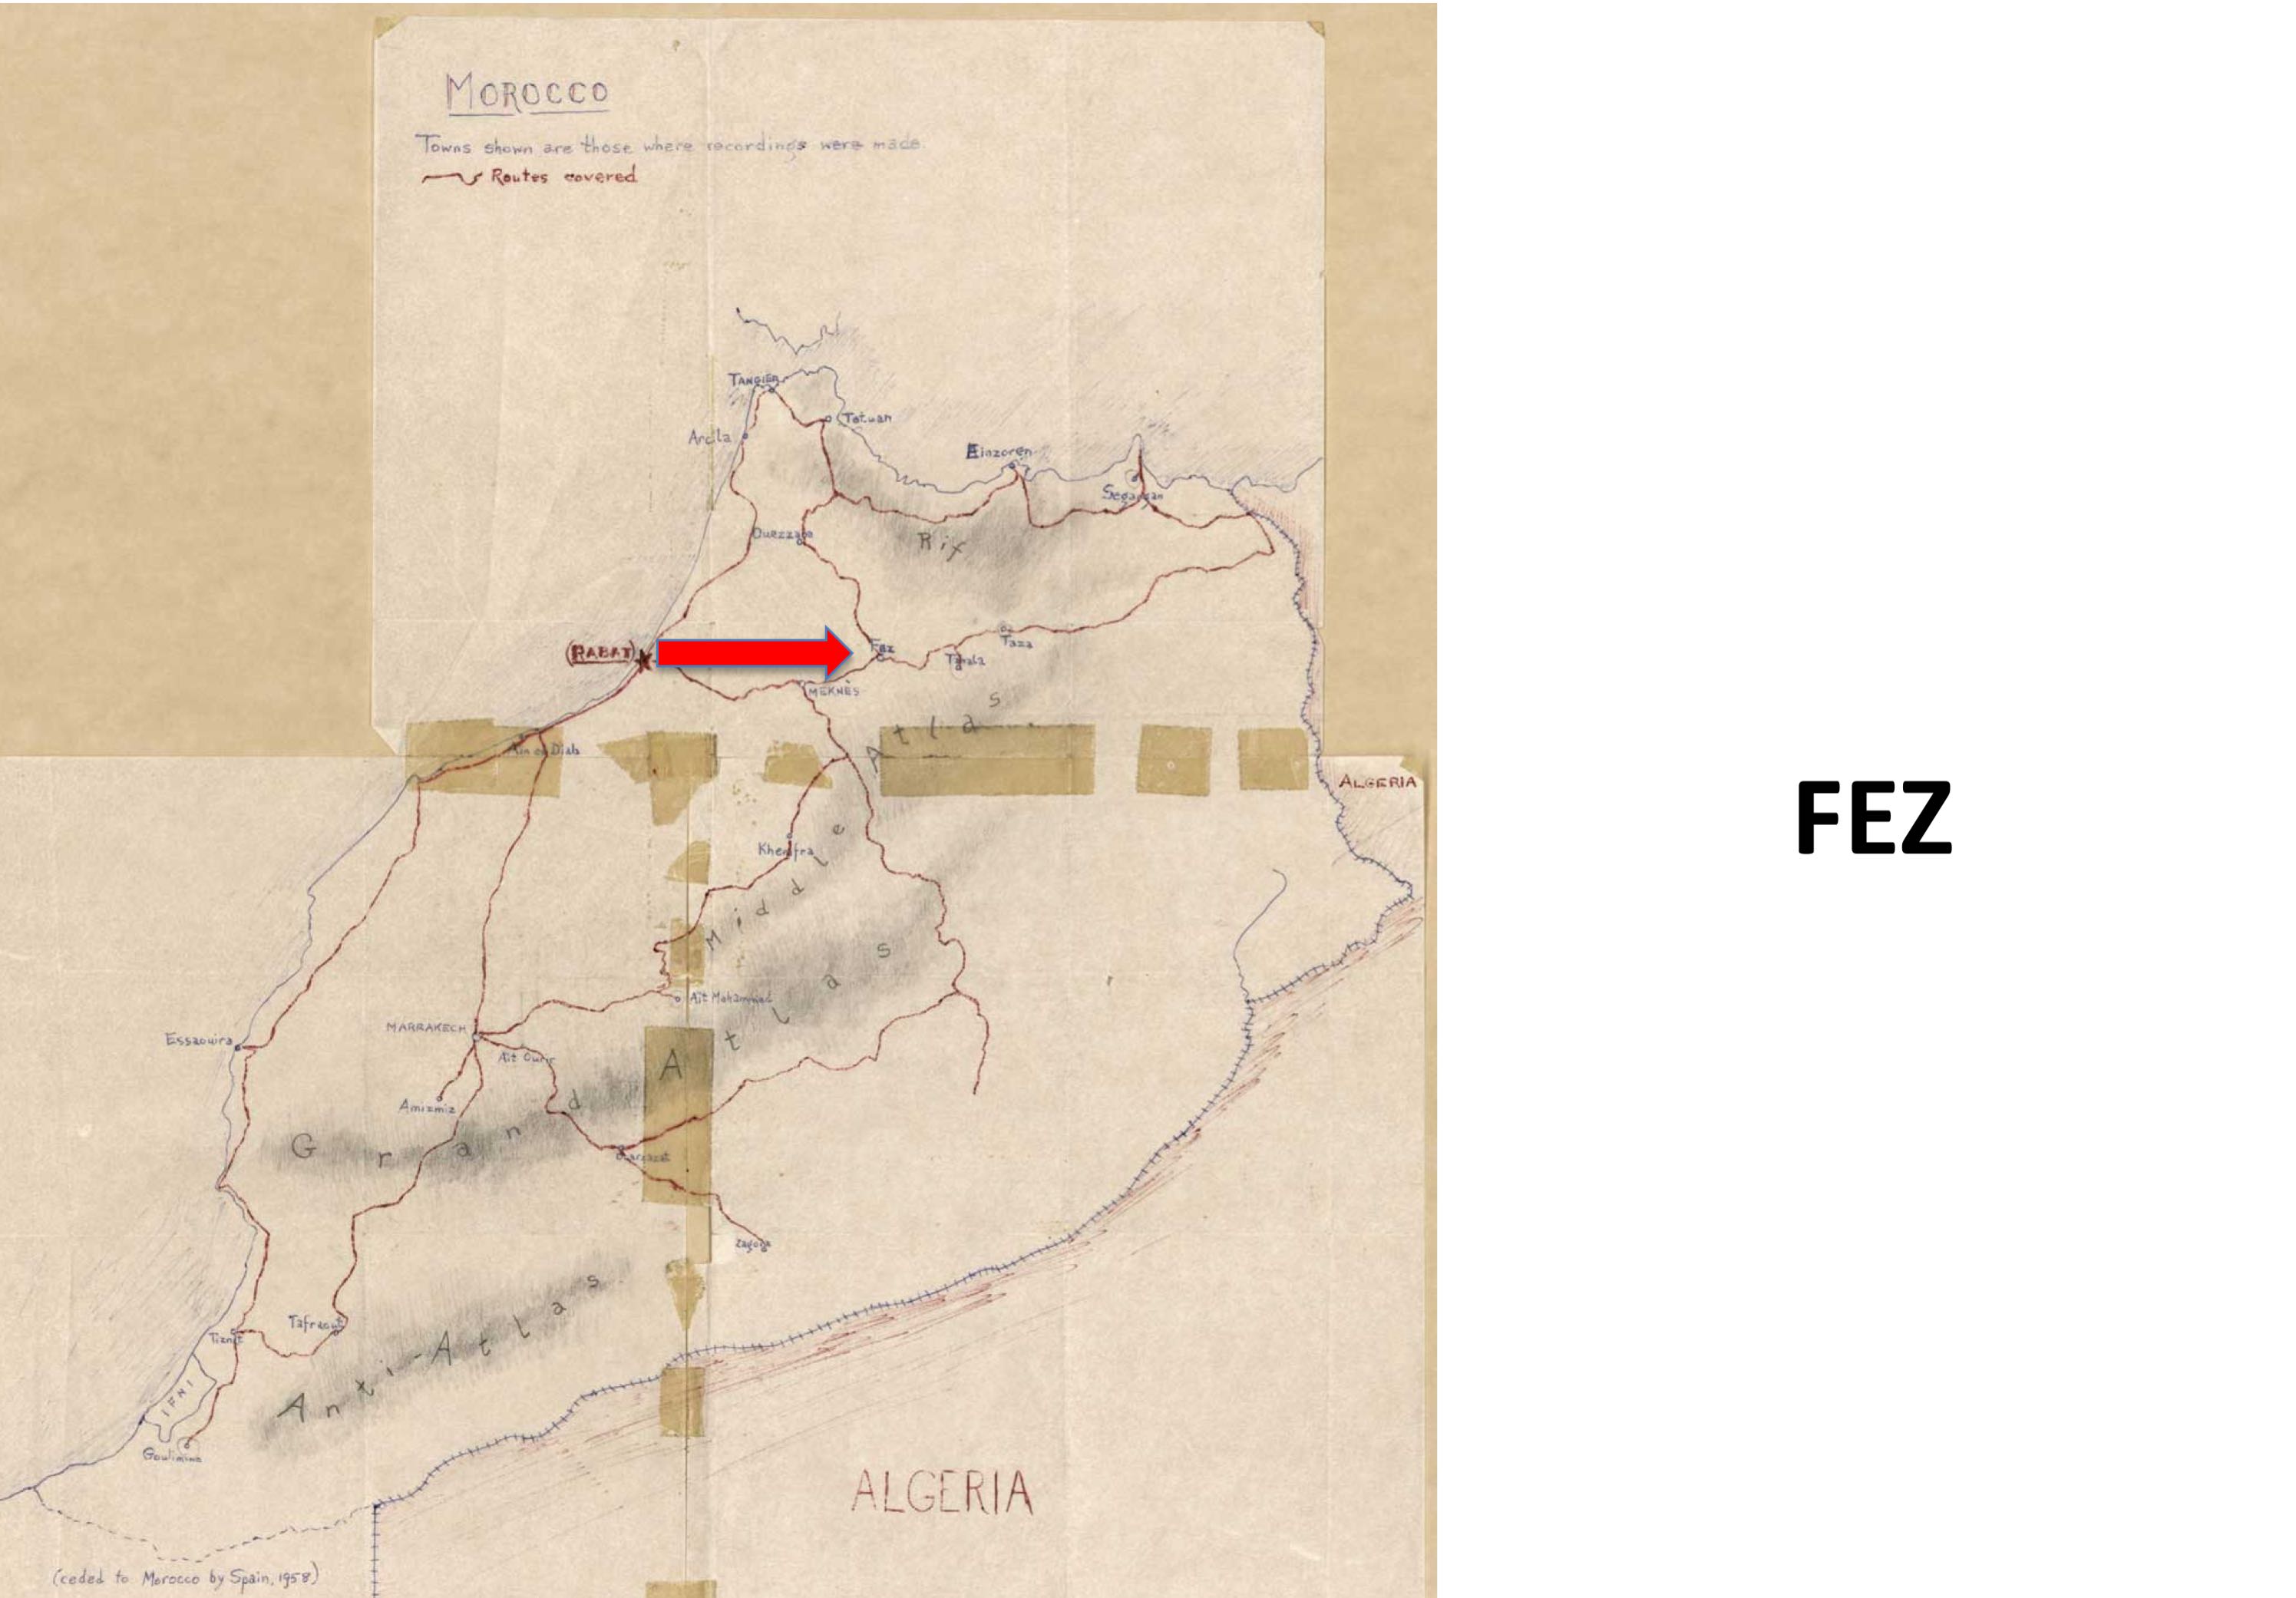 Recording Location: Fez